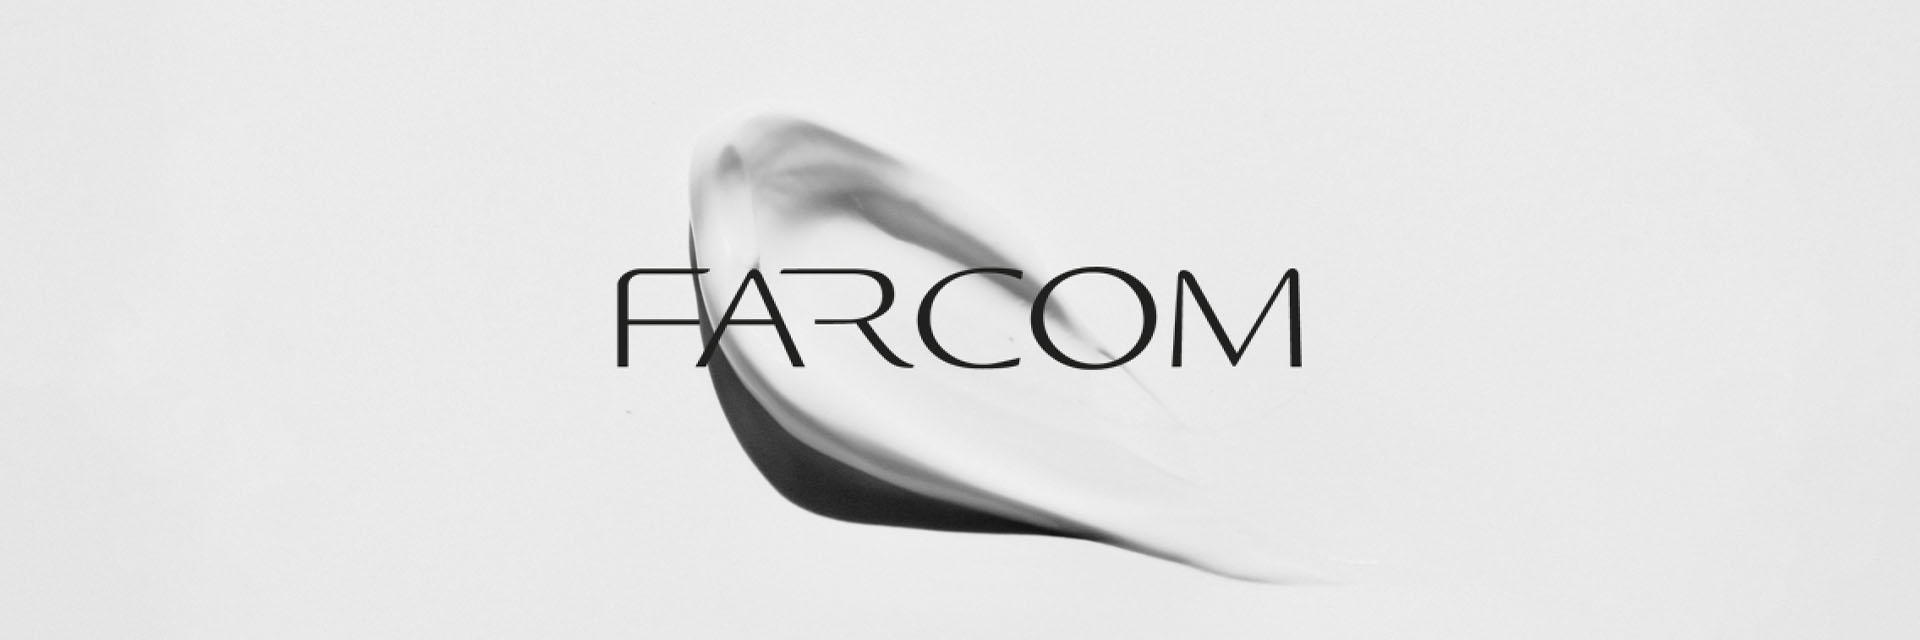 farcom banner 2